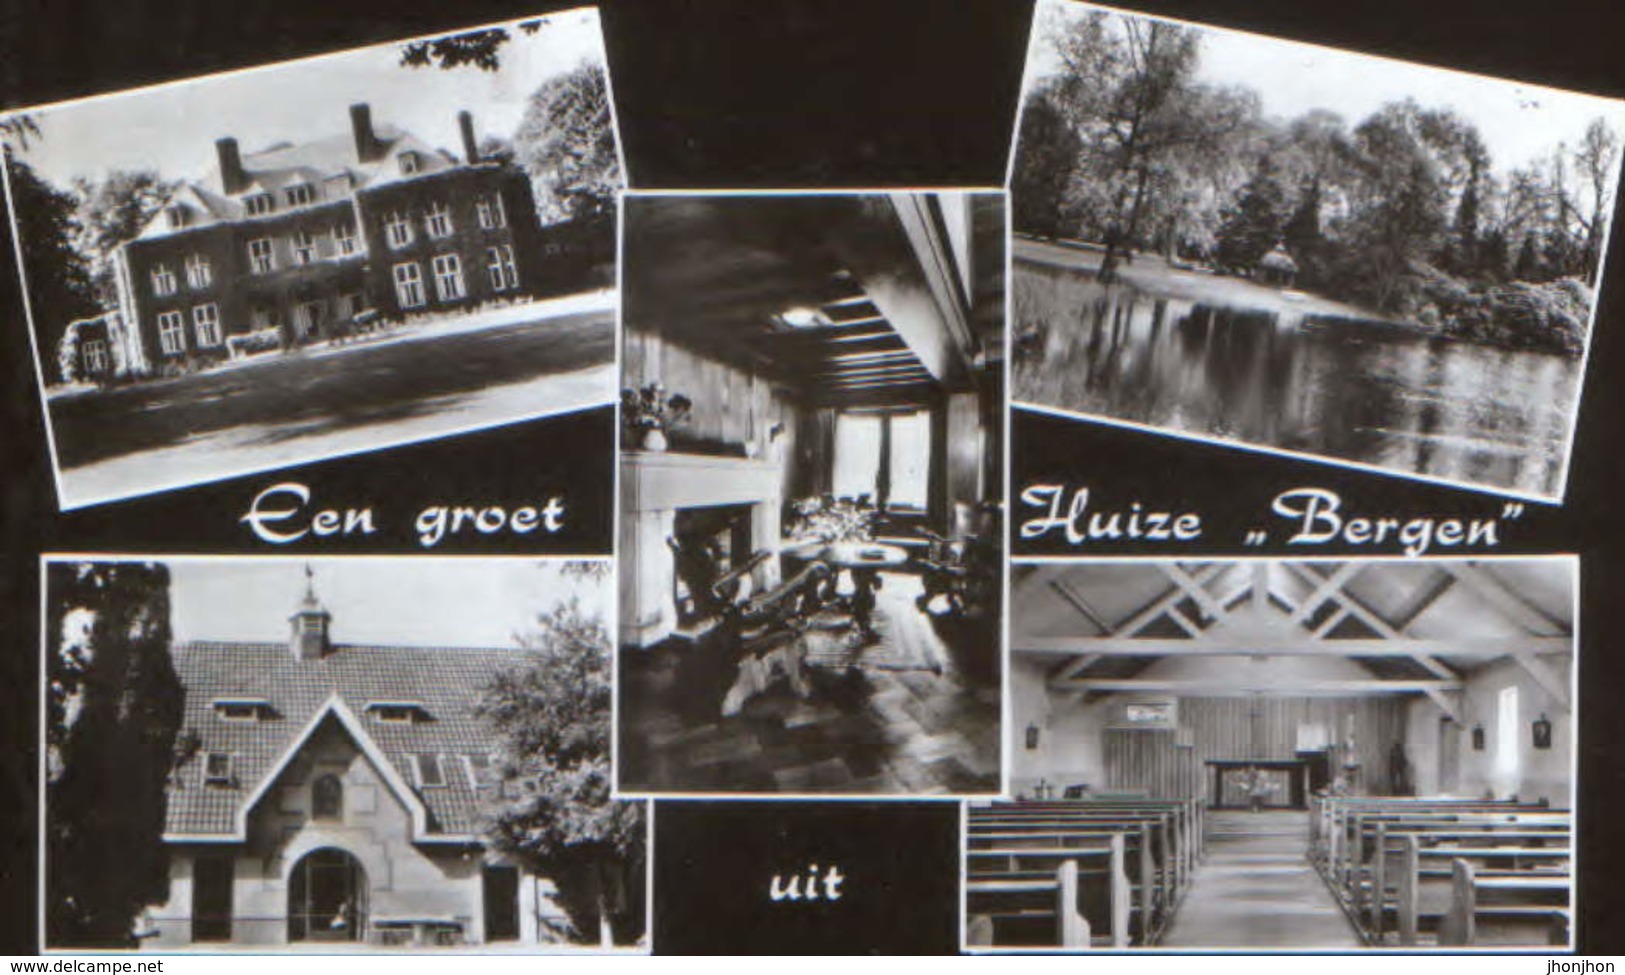 Nederland - Postcard Used 1965 - House "Bergen", Vught - 2/scans - Vught